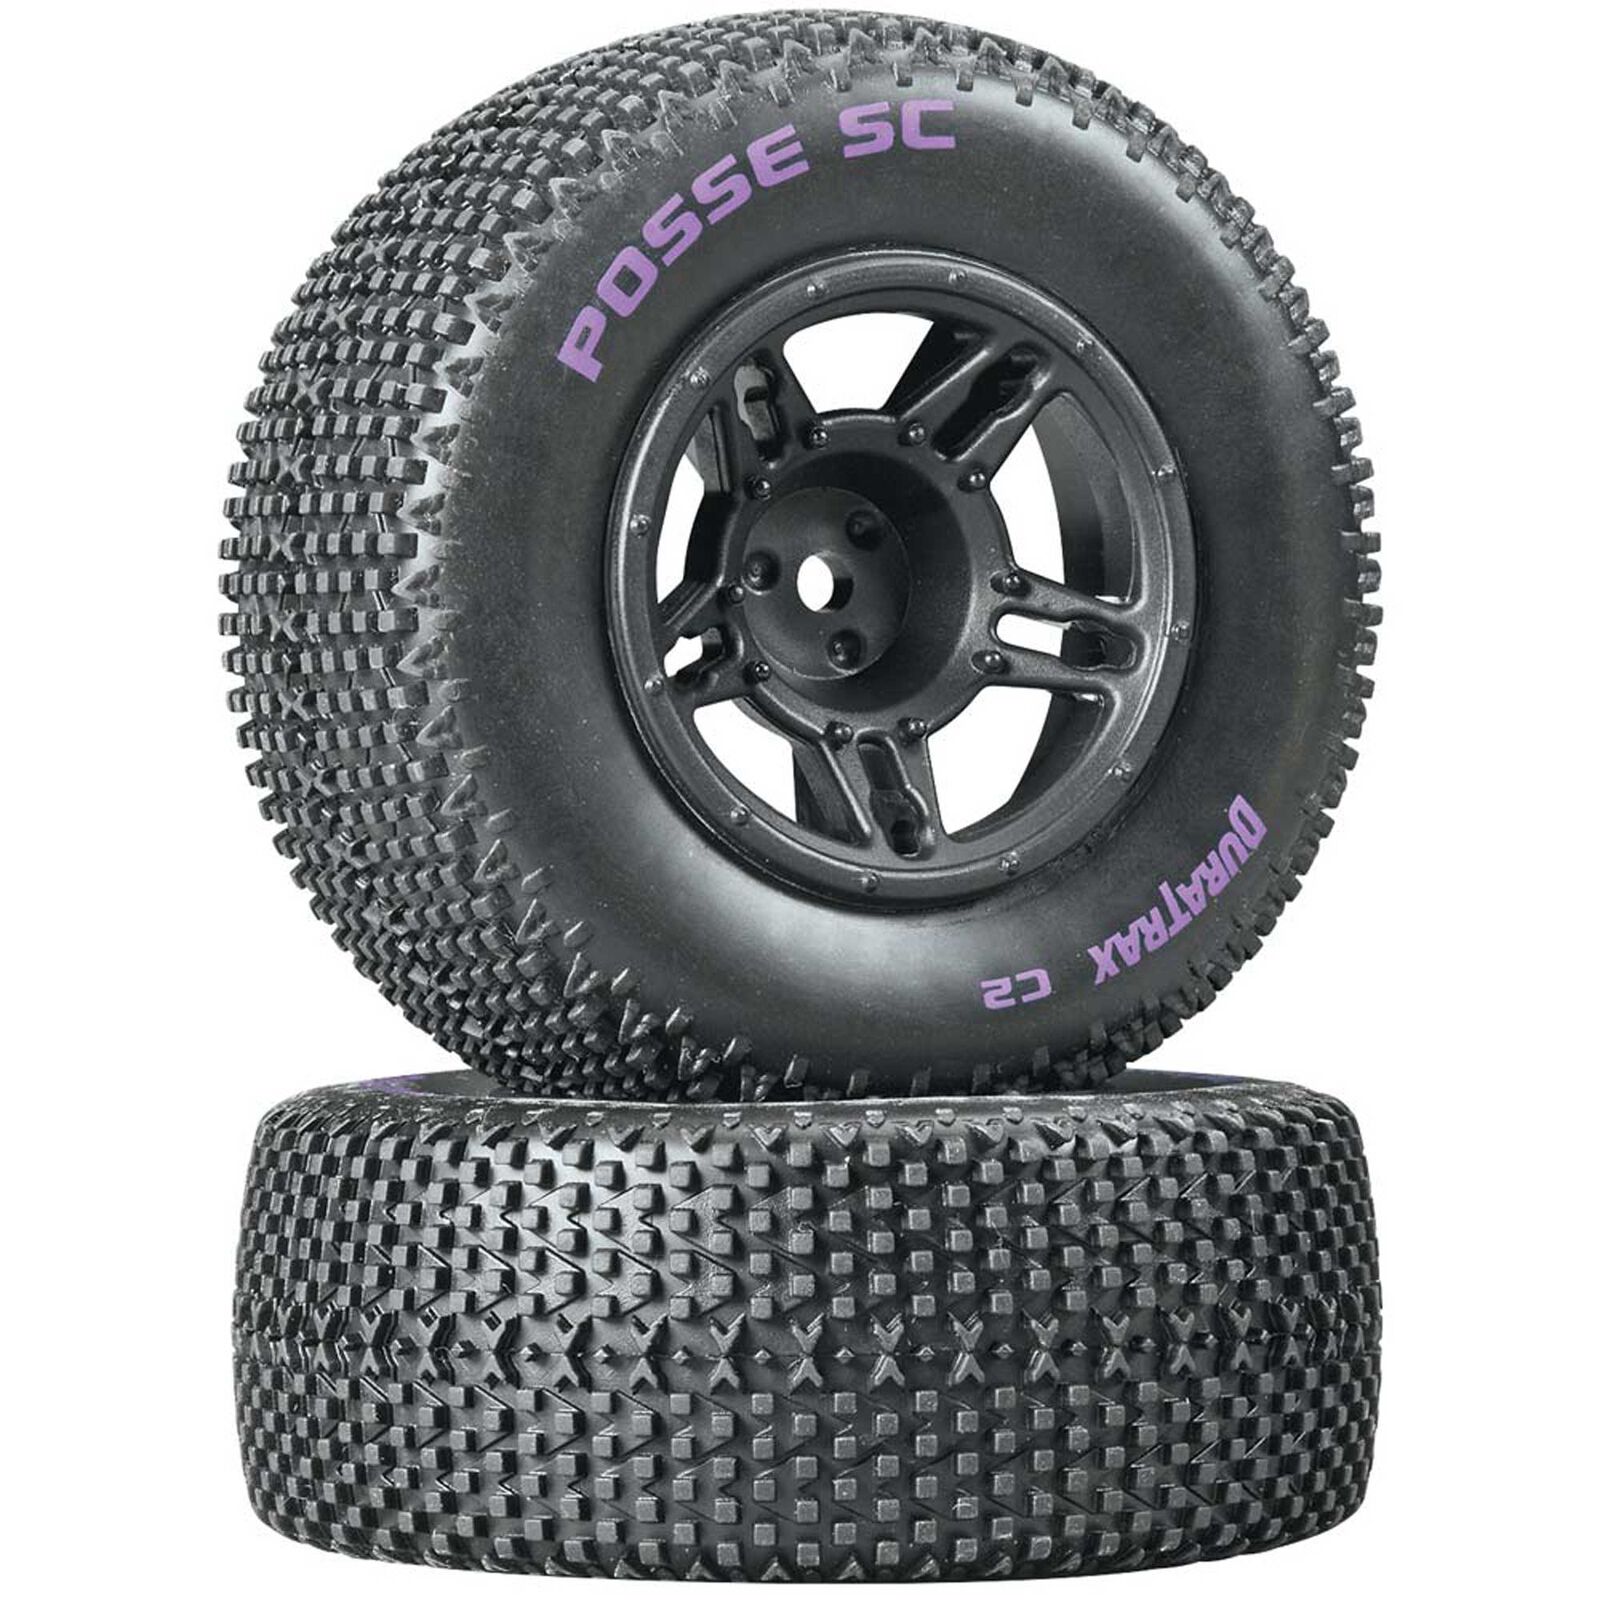 Posse SC C2 Mounted Tires, Front: Slash (2)